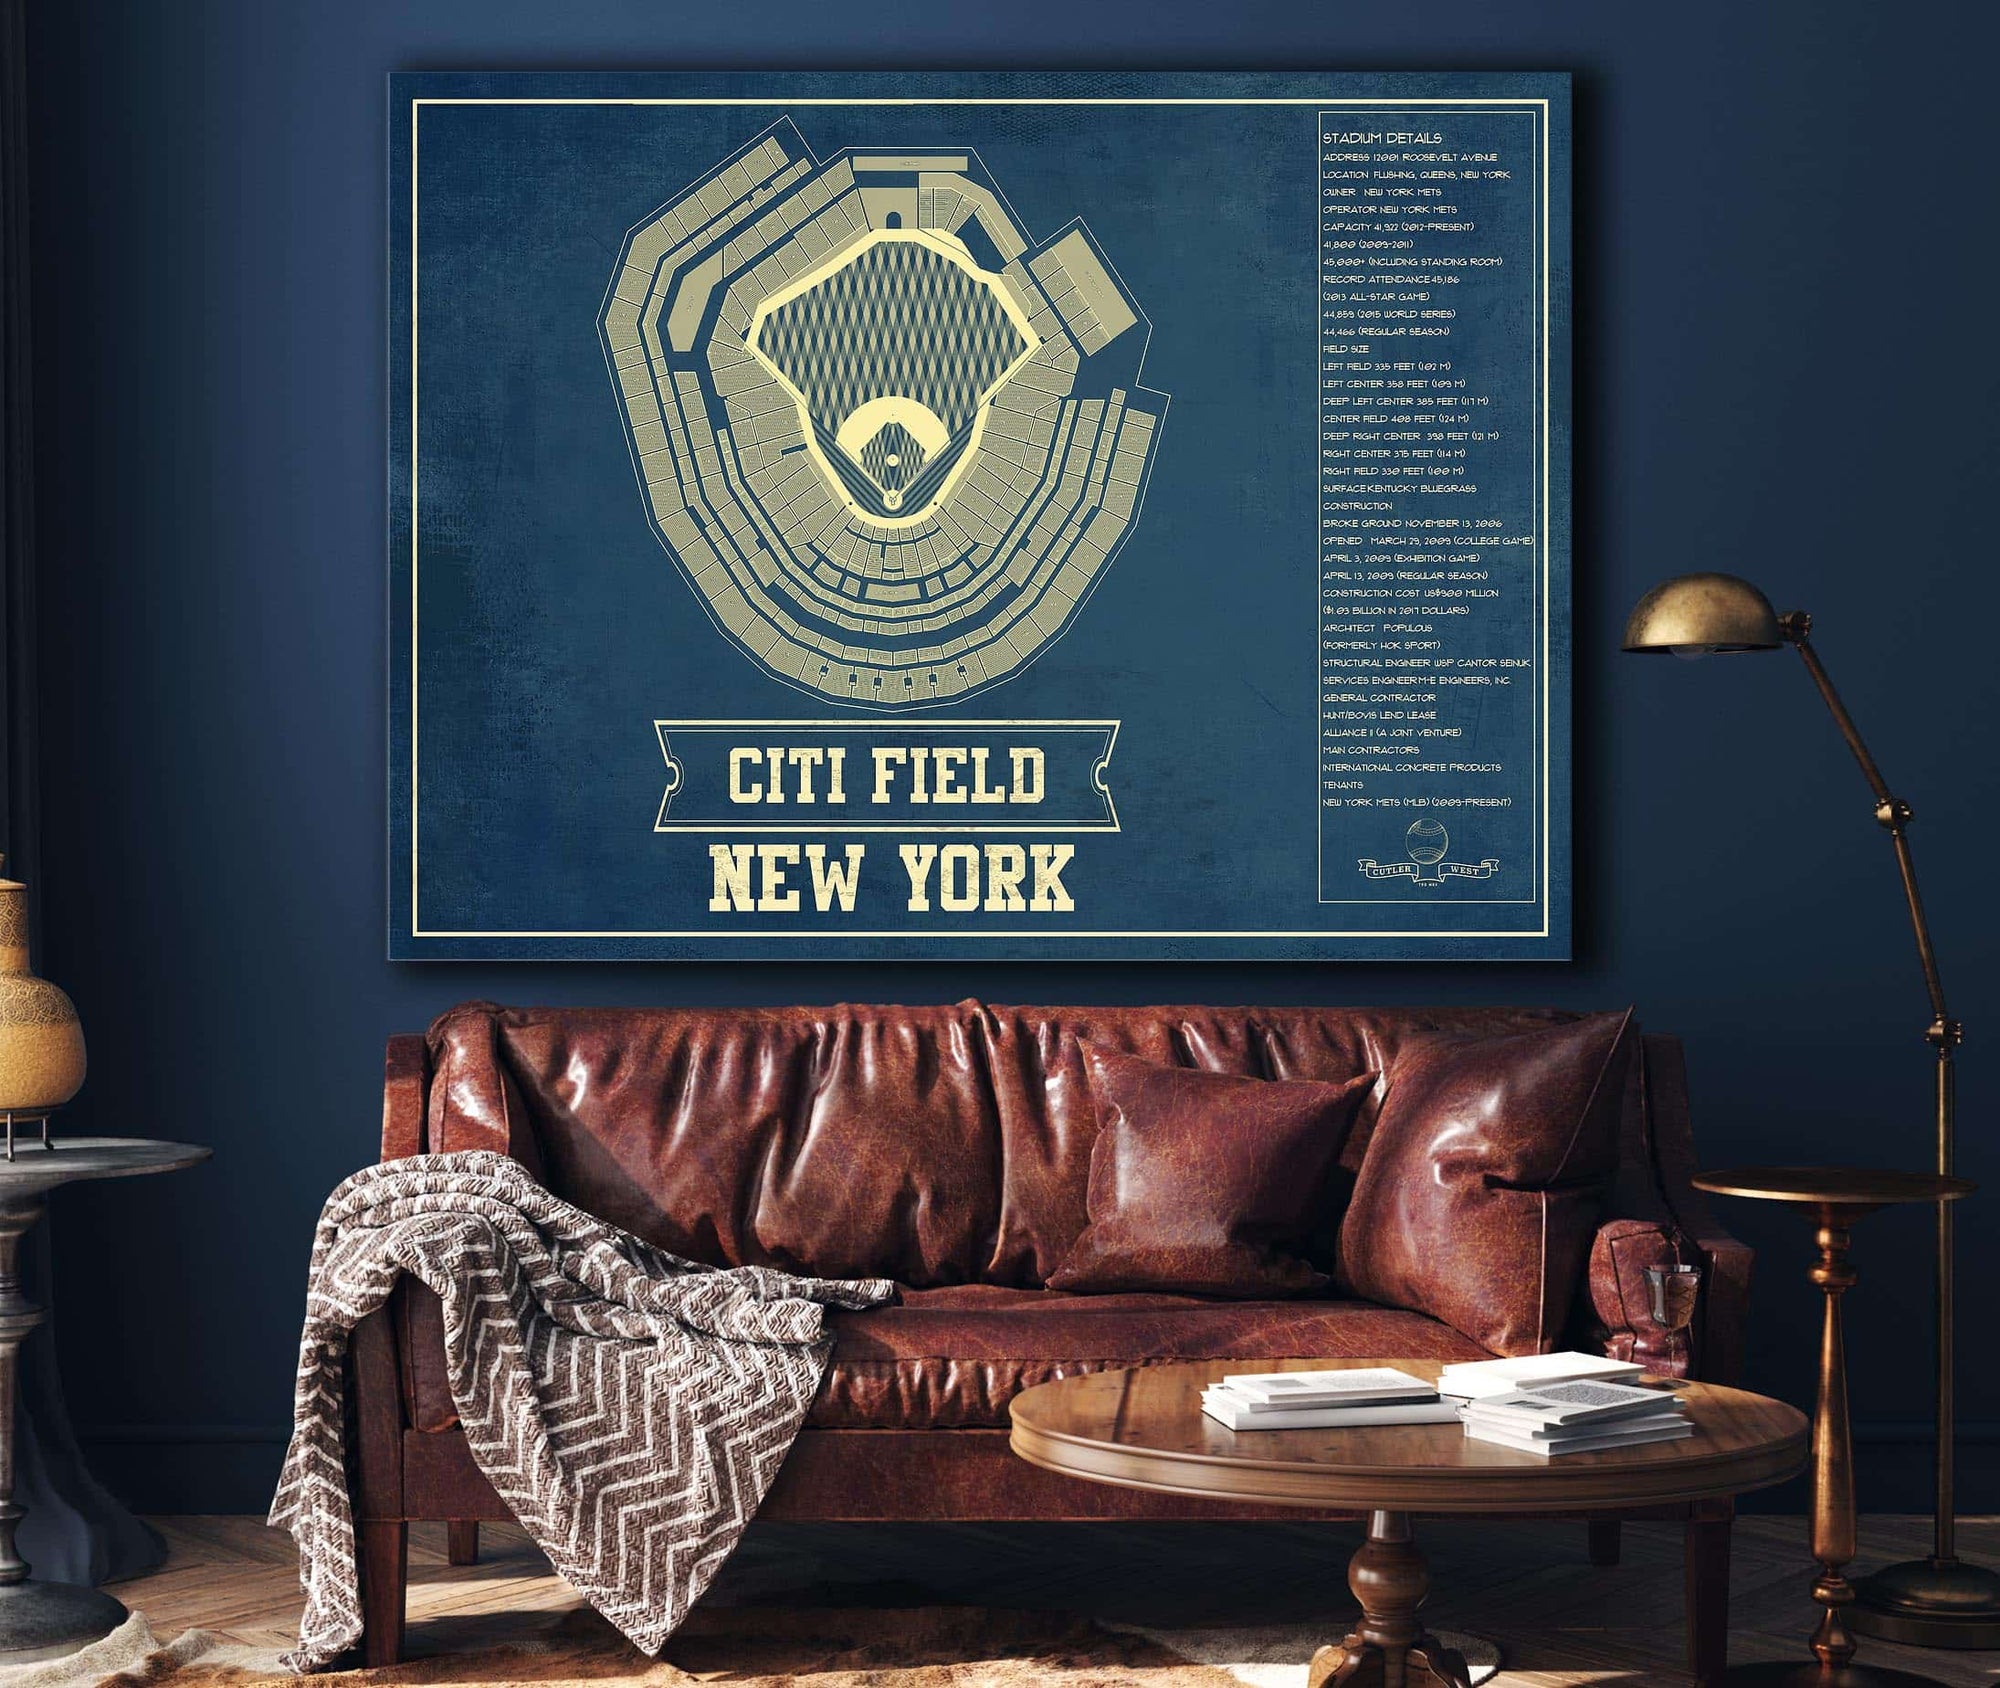 Cutler West New York Mets - Citi Field Vintage Seating Chart Baseball Print